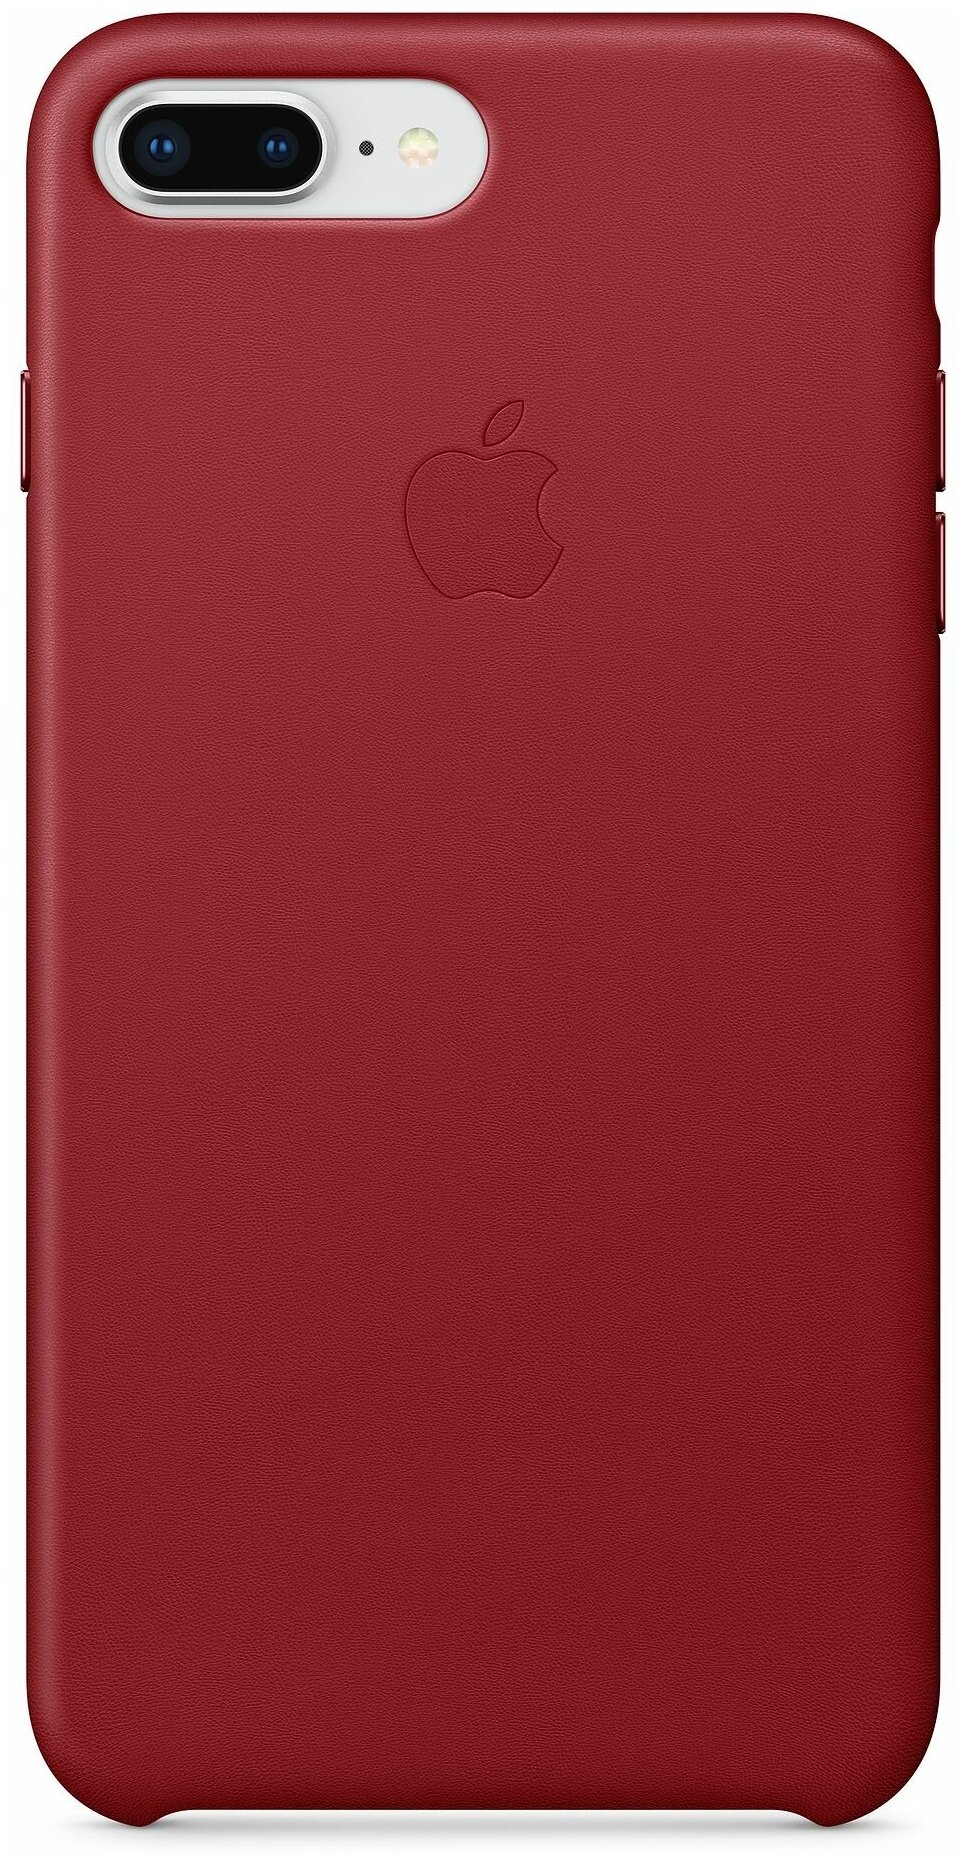 Чехол Apple кожаный для iPhone 8 Plus / 7 Plus, (PRODUCT)RED